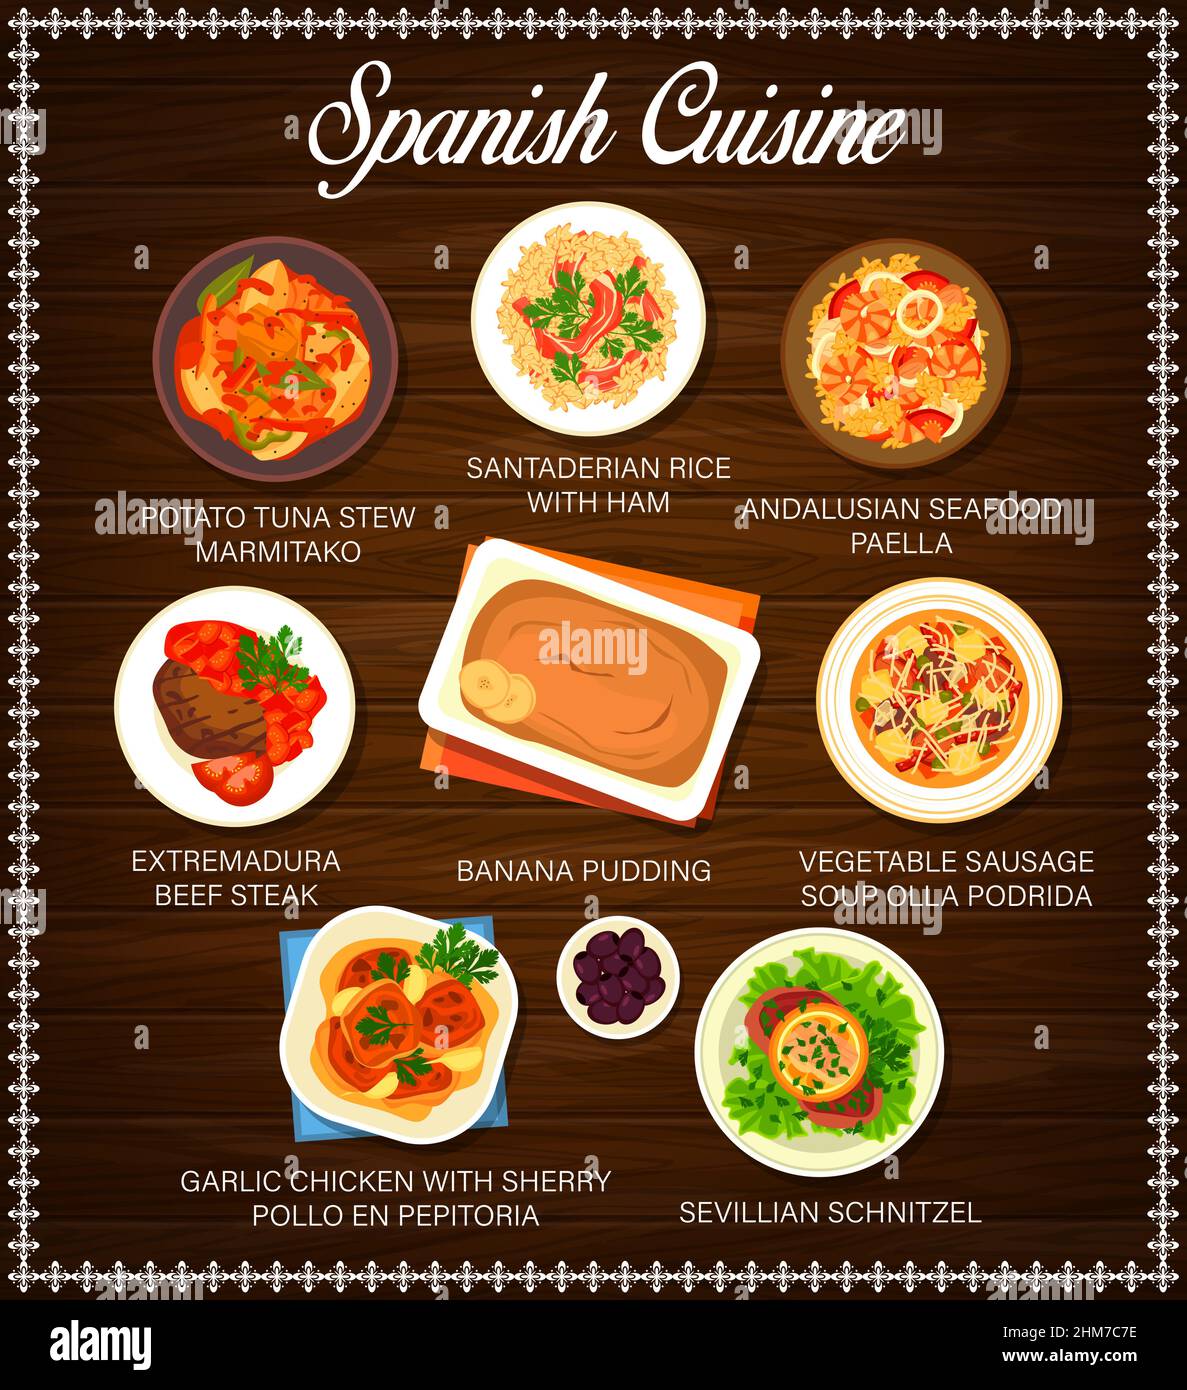 Spanish cuisine vector menu potato tuna stew marmitako, santaderian rice with ham, andalusian seafood paella, extremadura beef steak, Banana pudding, Stock Vector